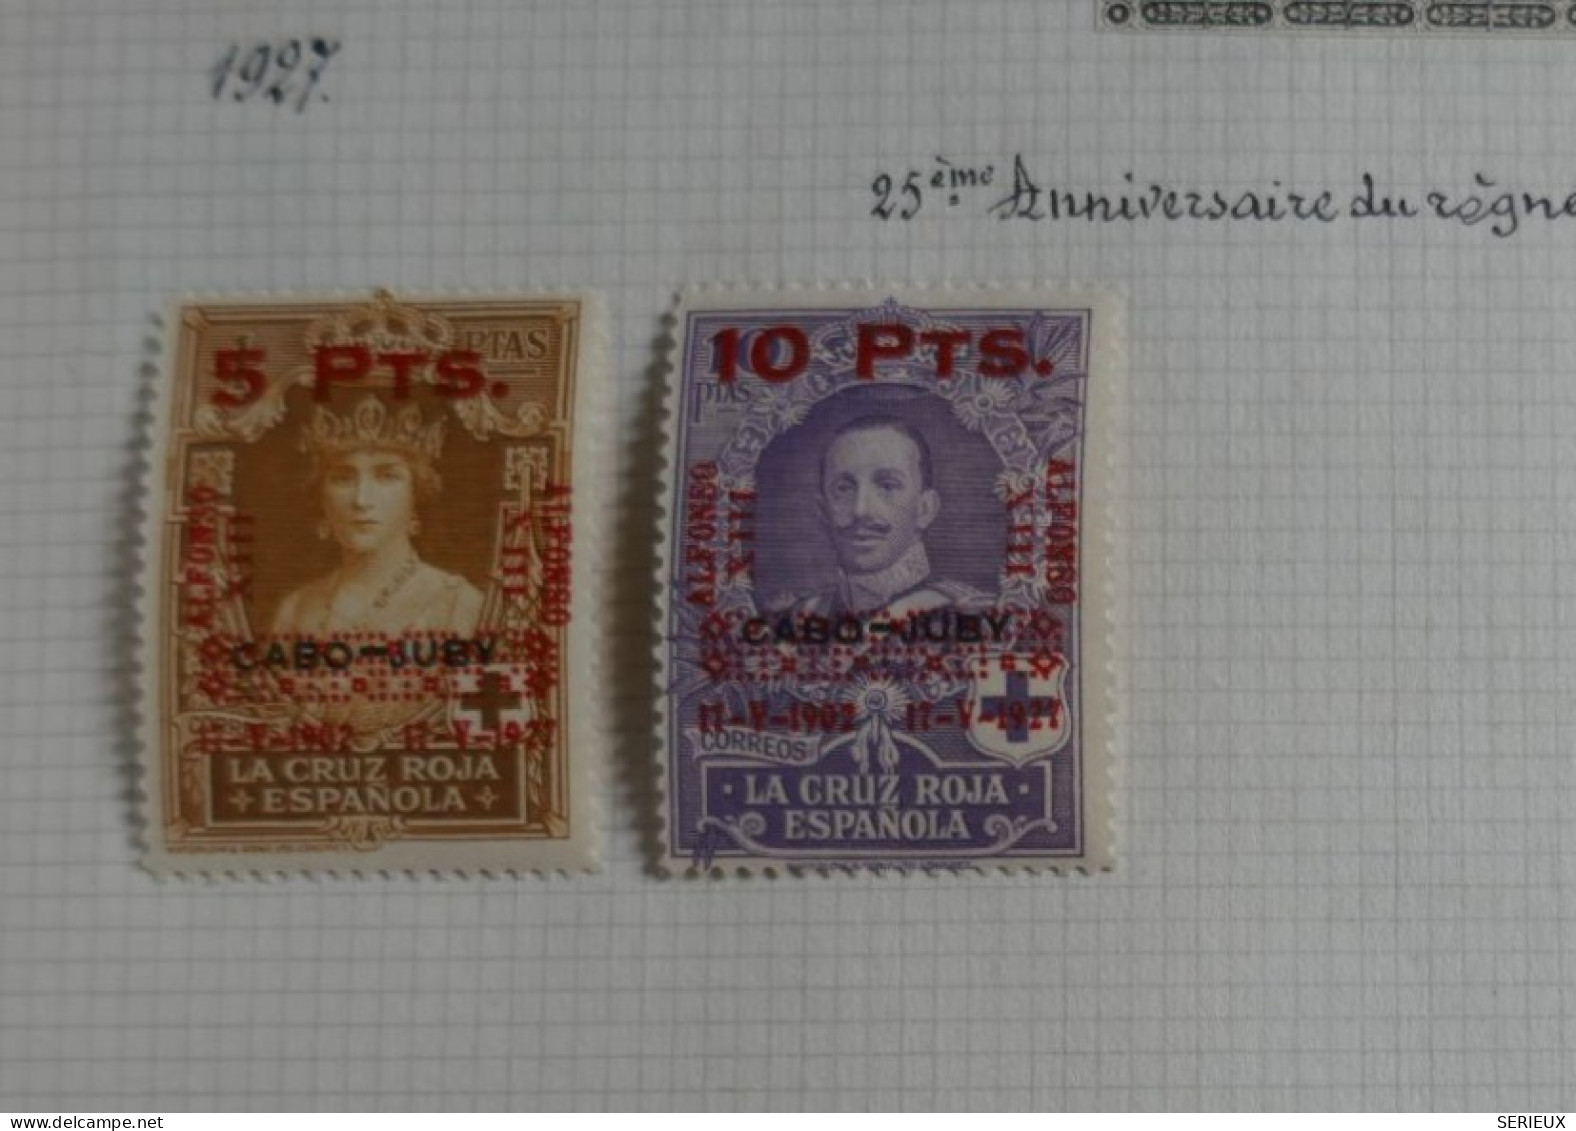 \+\ RED CROSS ESPANA  BELLE PAGE SERIE NEUVE   SURCHARGES CABO JUBY SUR CHARN.  DE 1927 CROIX ROUGE  +BELLE QUALITé+++ - Used Stamps